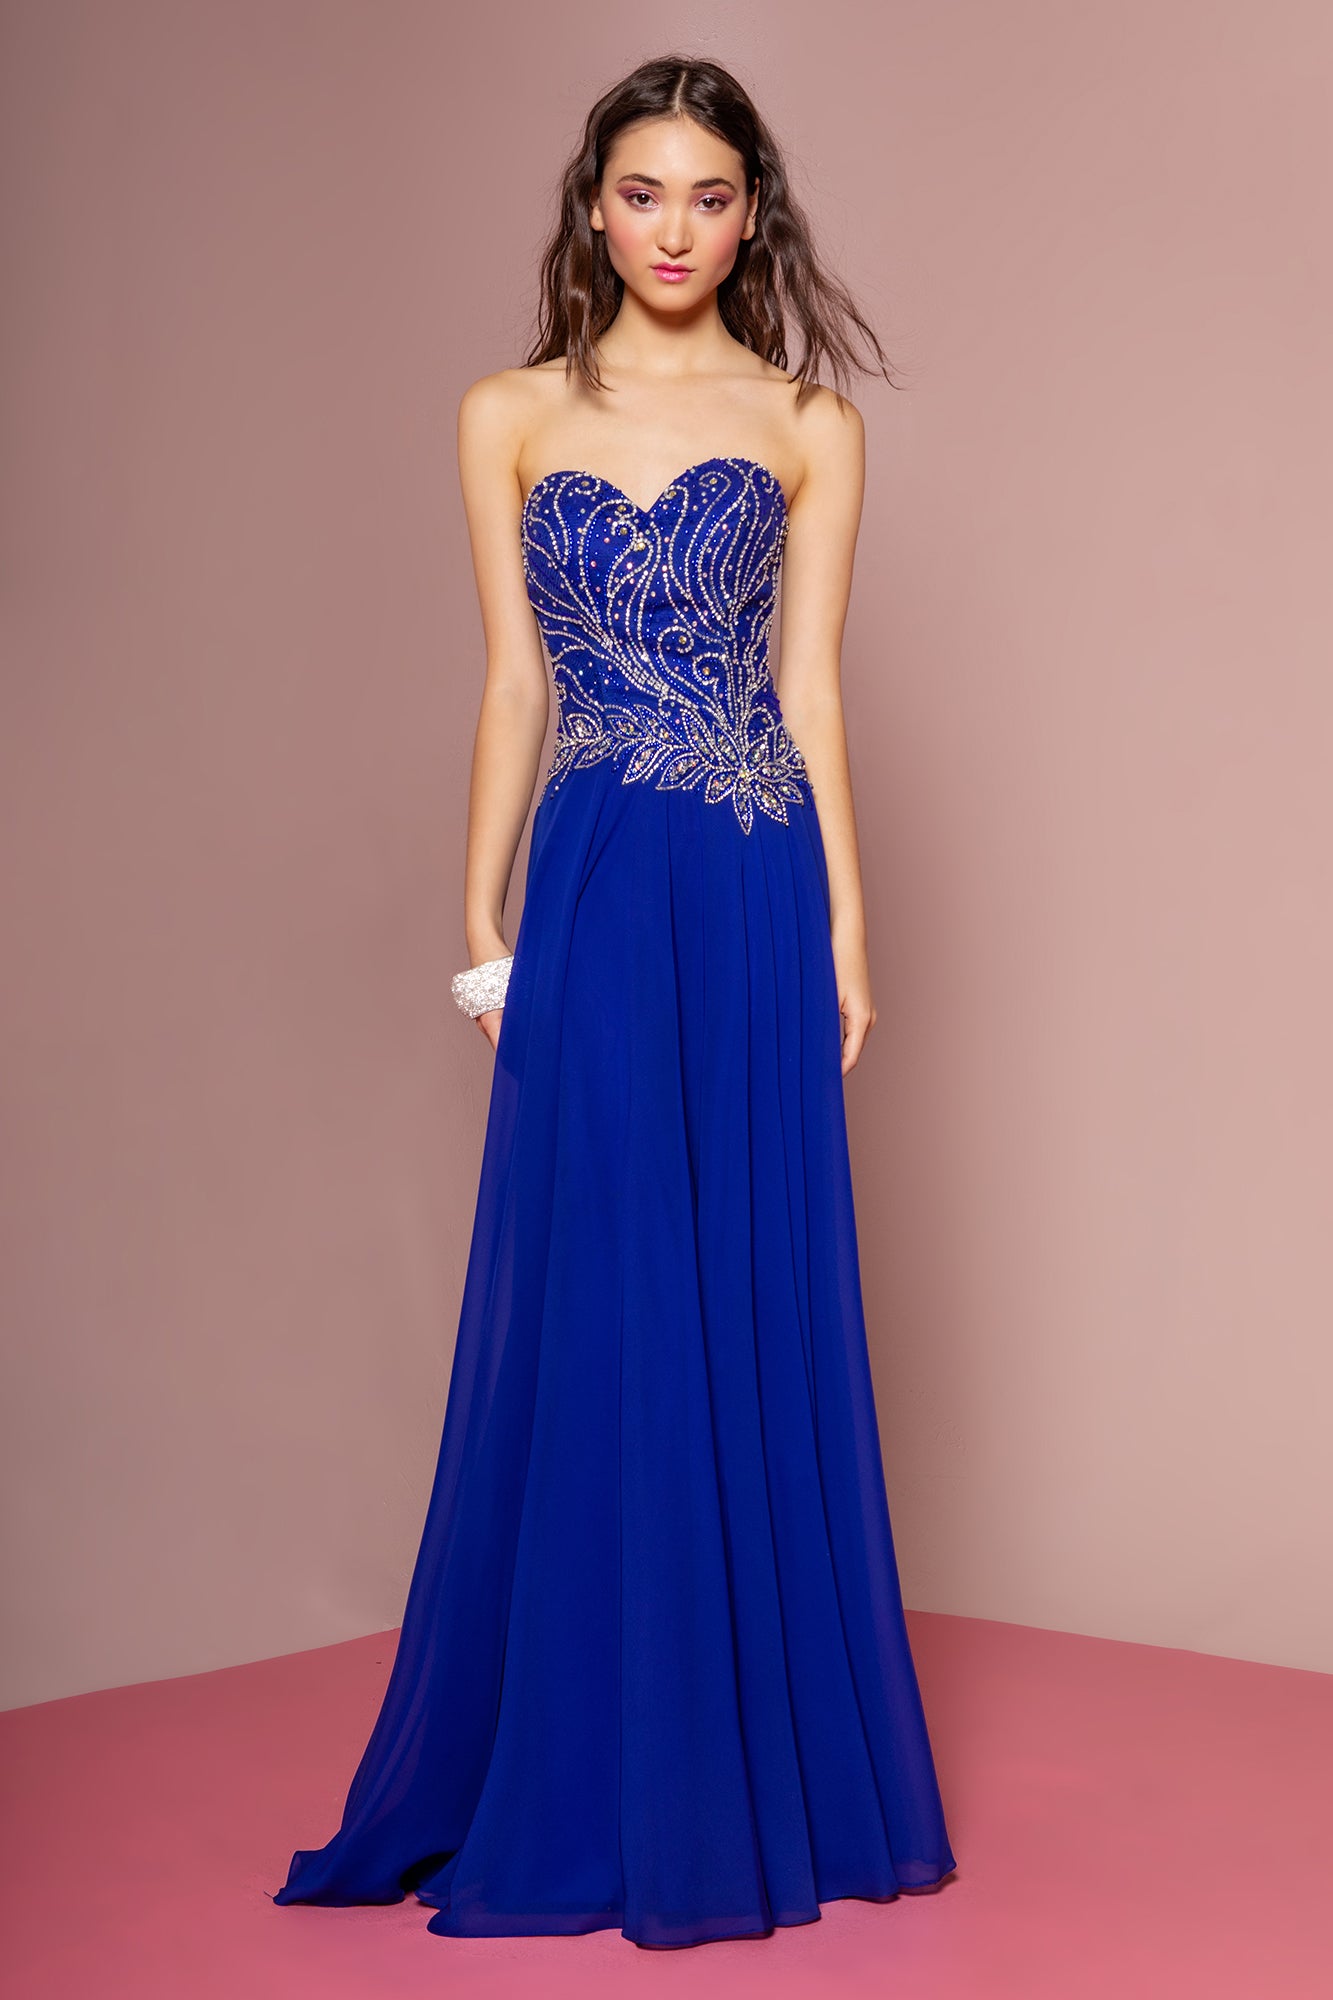 Embellished Strapless Sweetheart A-Line Dress by Elizabeth K - GL2114